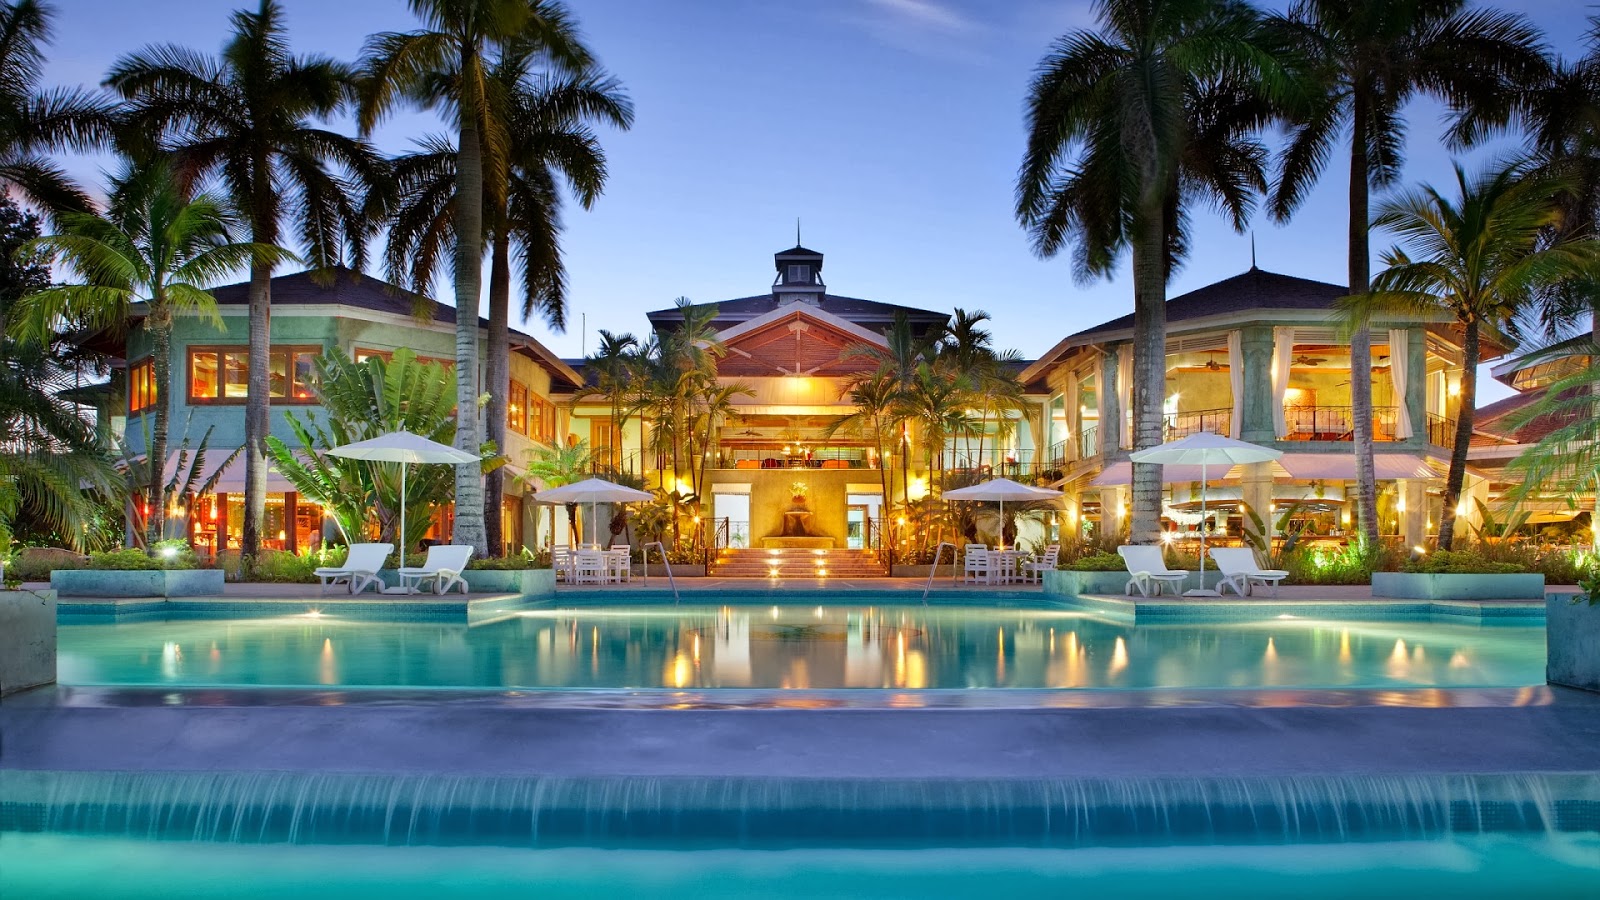 Luxury Resort At Night - Hotel Negril Jamaica - HD Wallpaper 